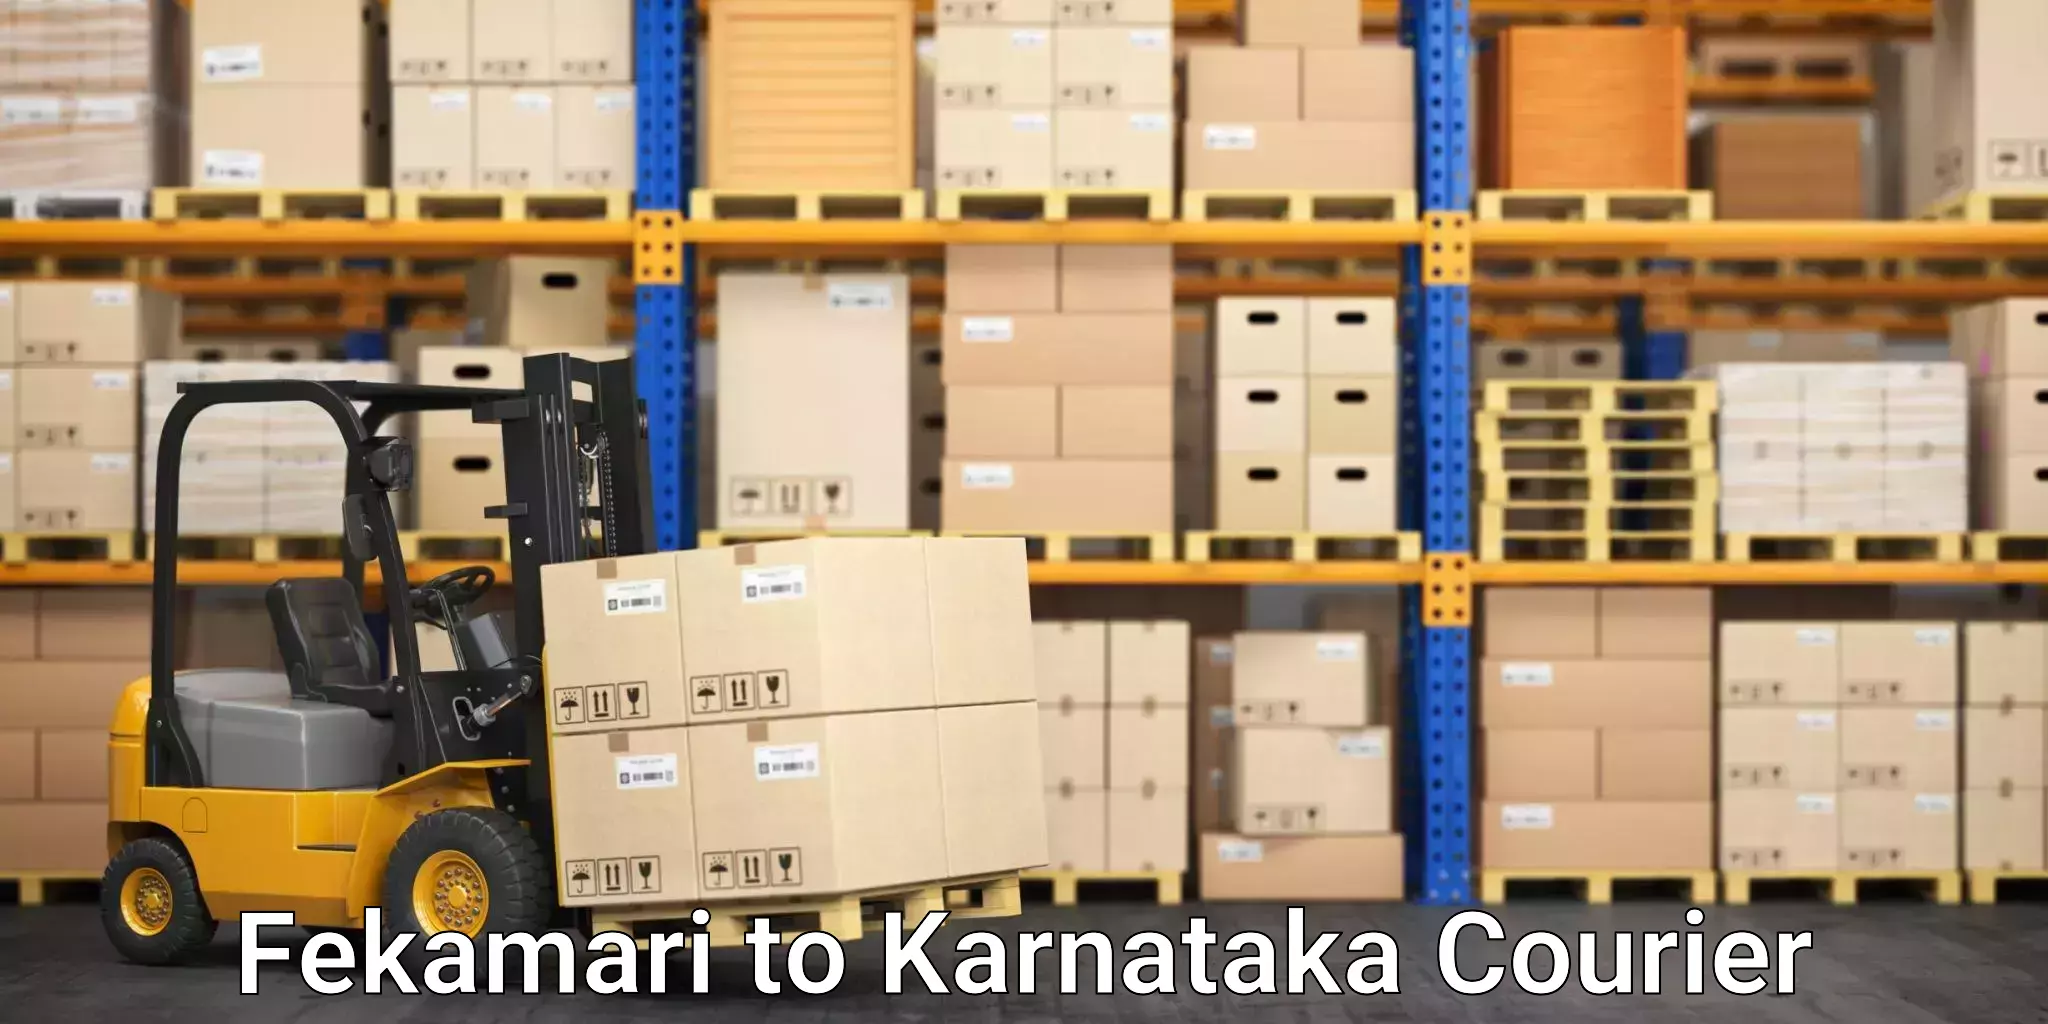 Express delivery capabilities Fekamari to Kotturu